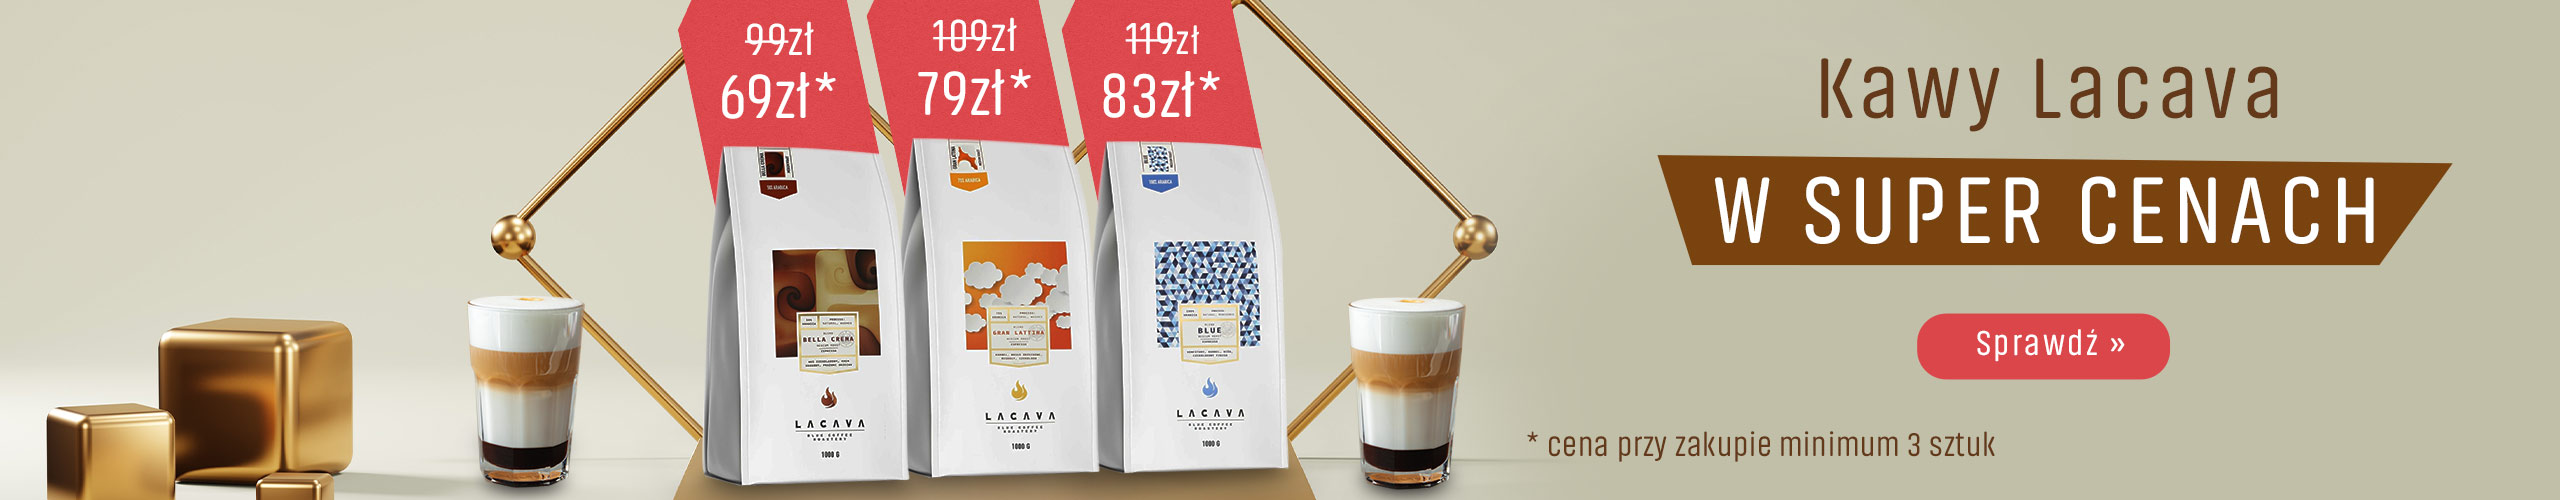 Kawy Lacava w super cenach